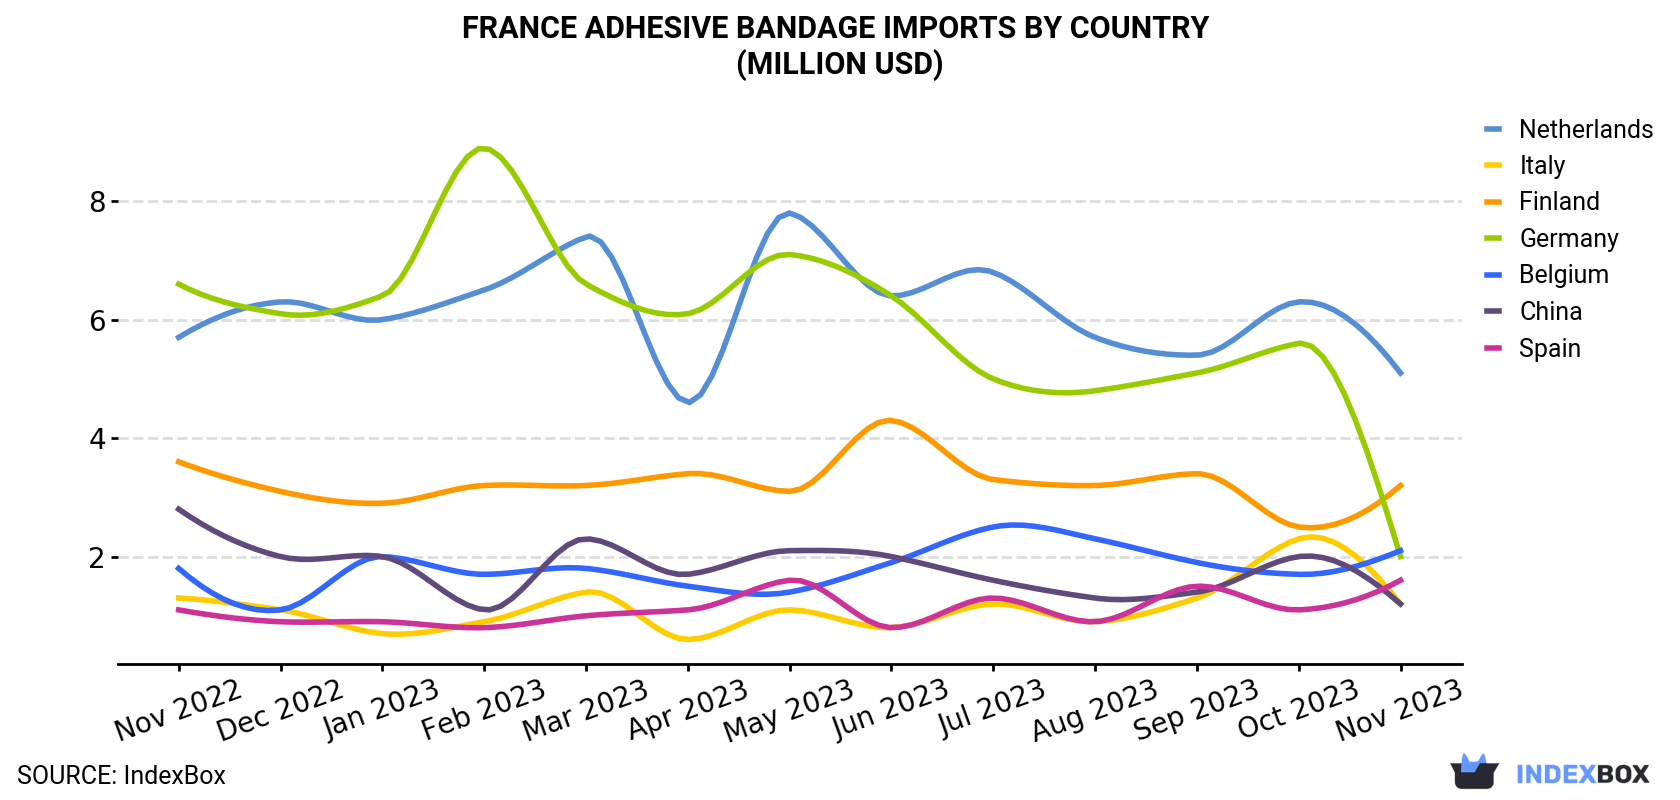 France Adhesive Bandage Imports By Country (Million USD)